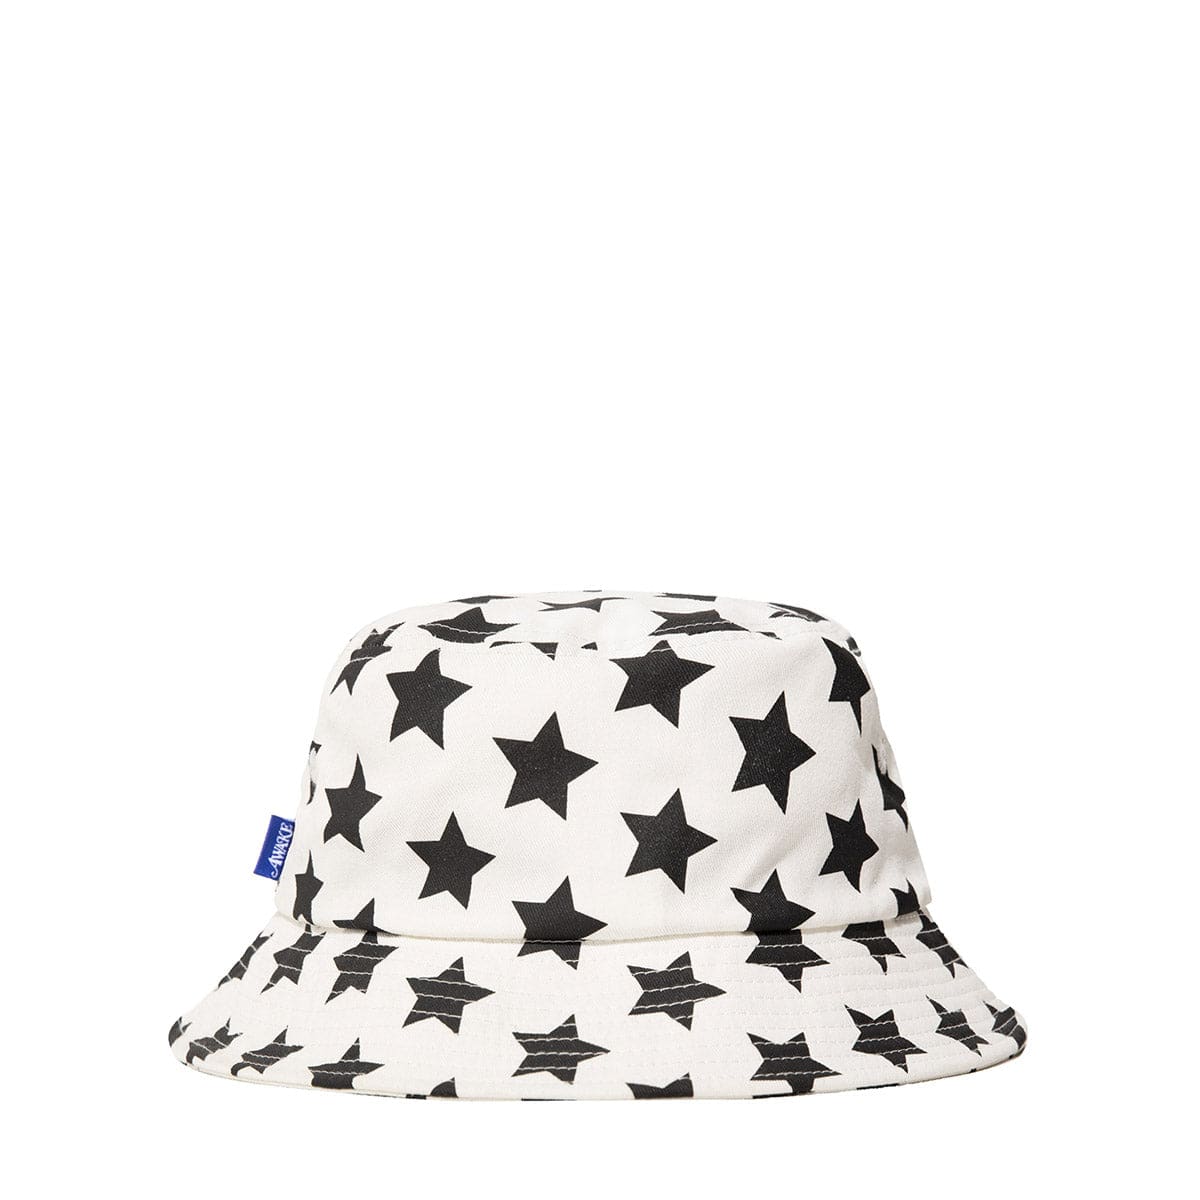 Awake NY Headwear STAR PRINTED BUCKET HAT